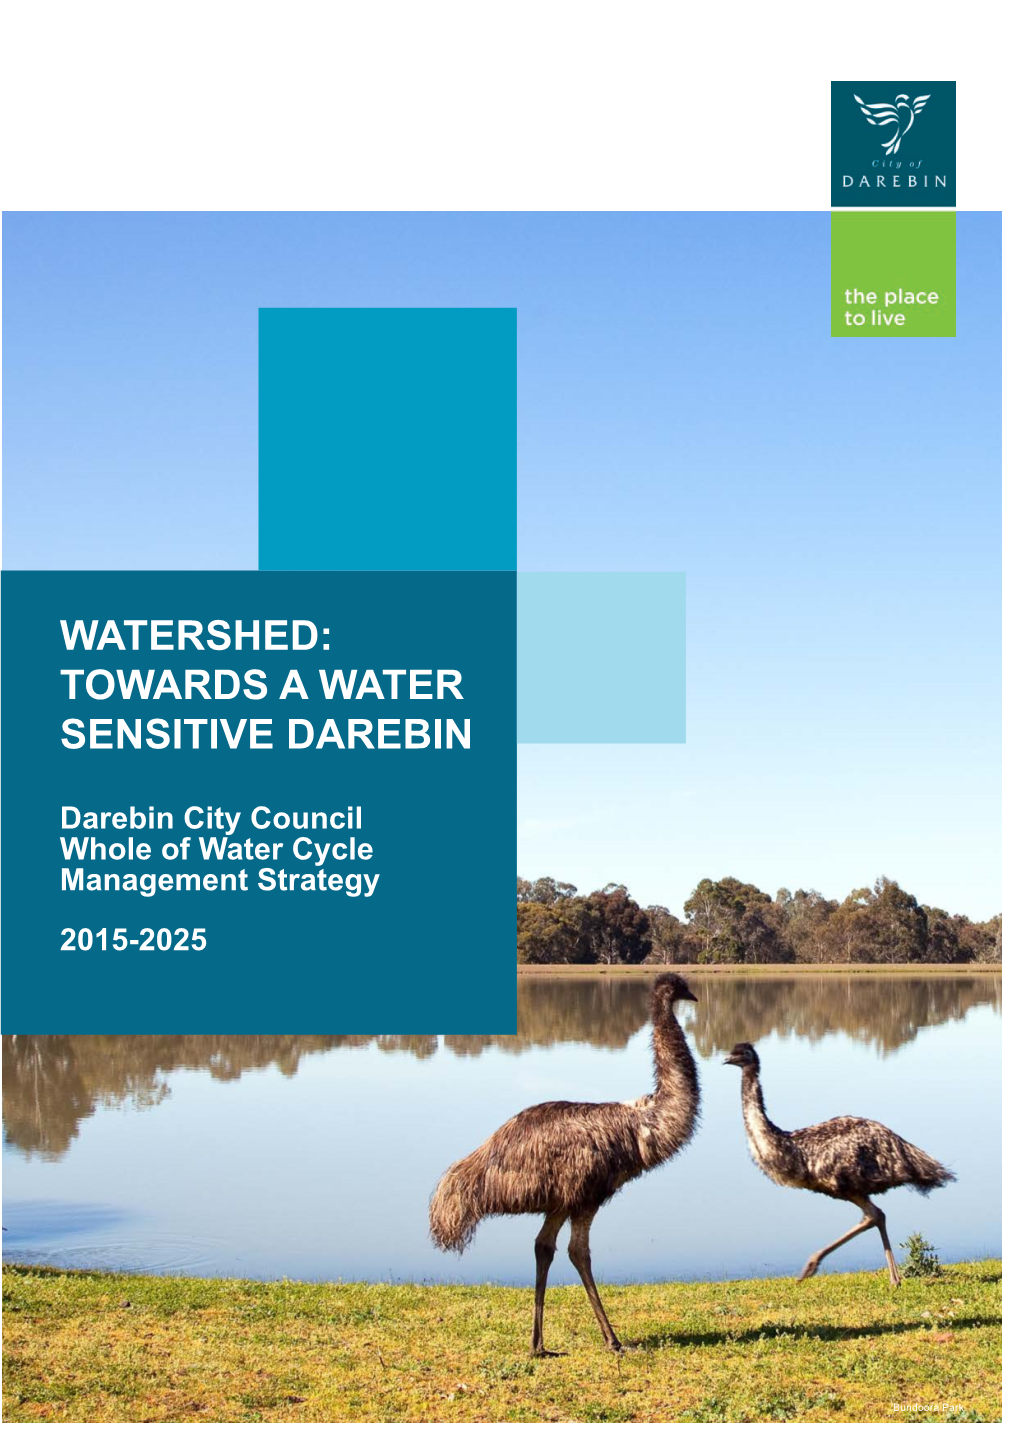 Watershed: Towards a Water Sensitive Darebin